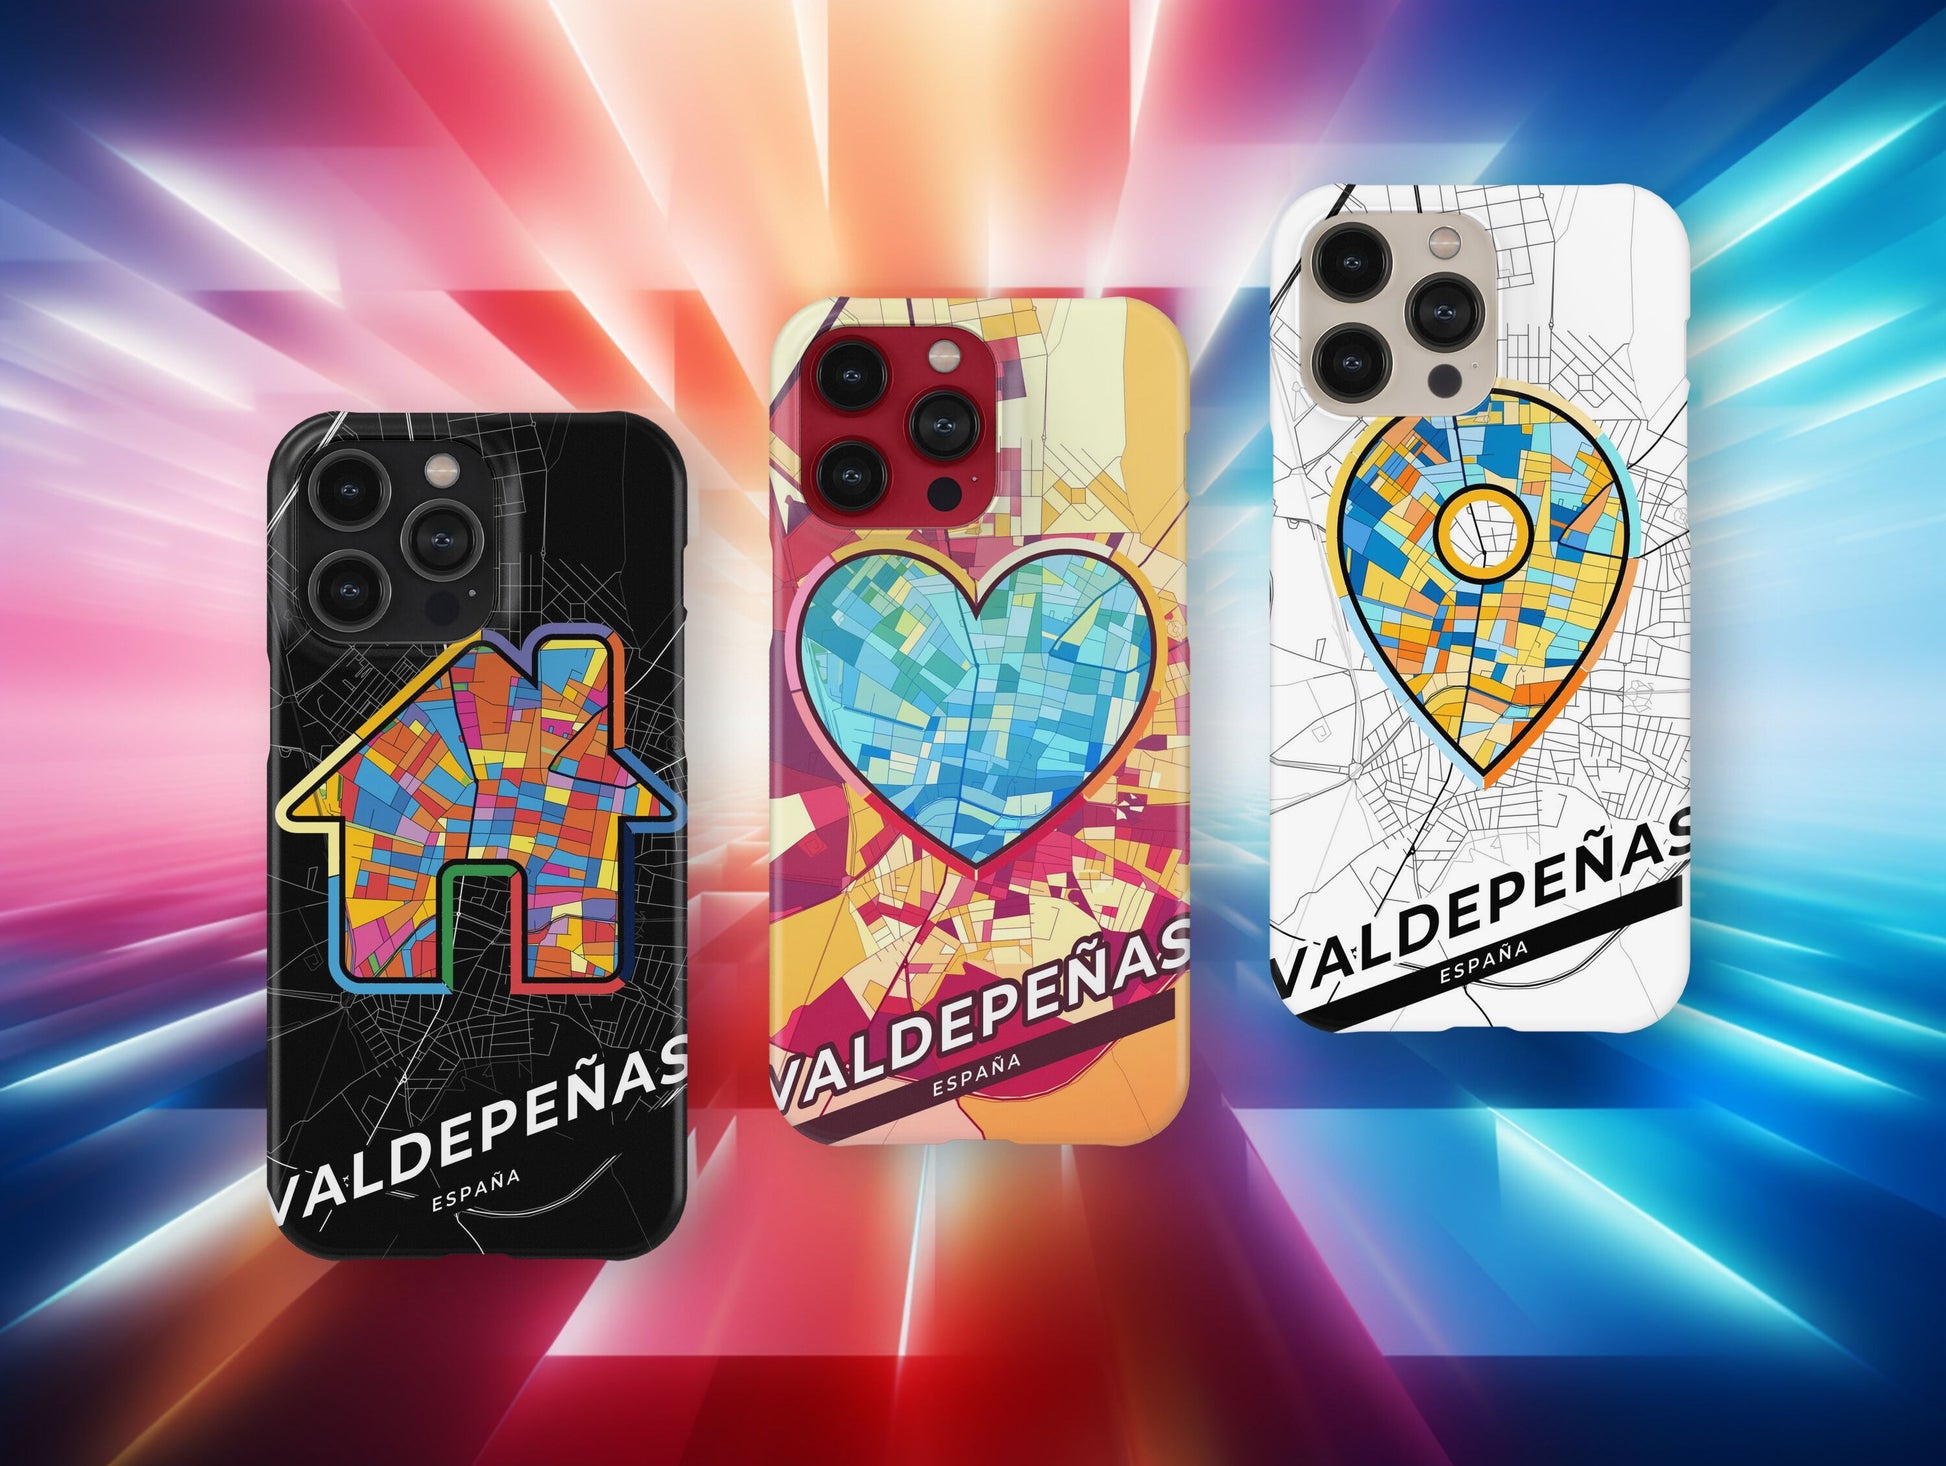 Valdepeñas Spain slim phone case with colorful icon